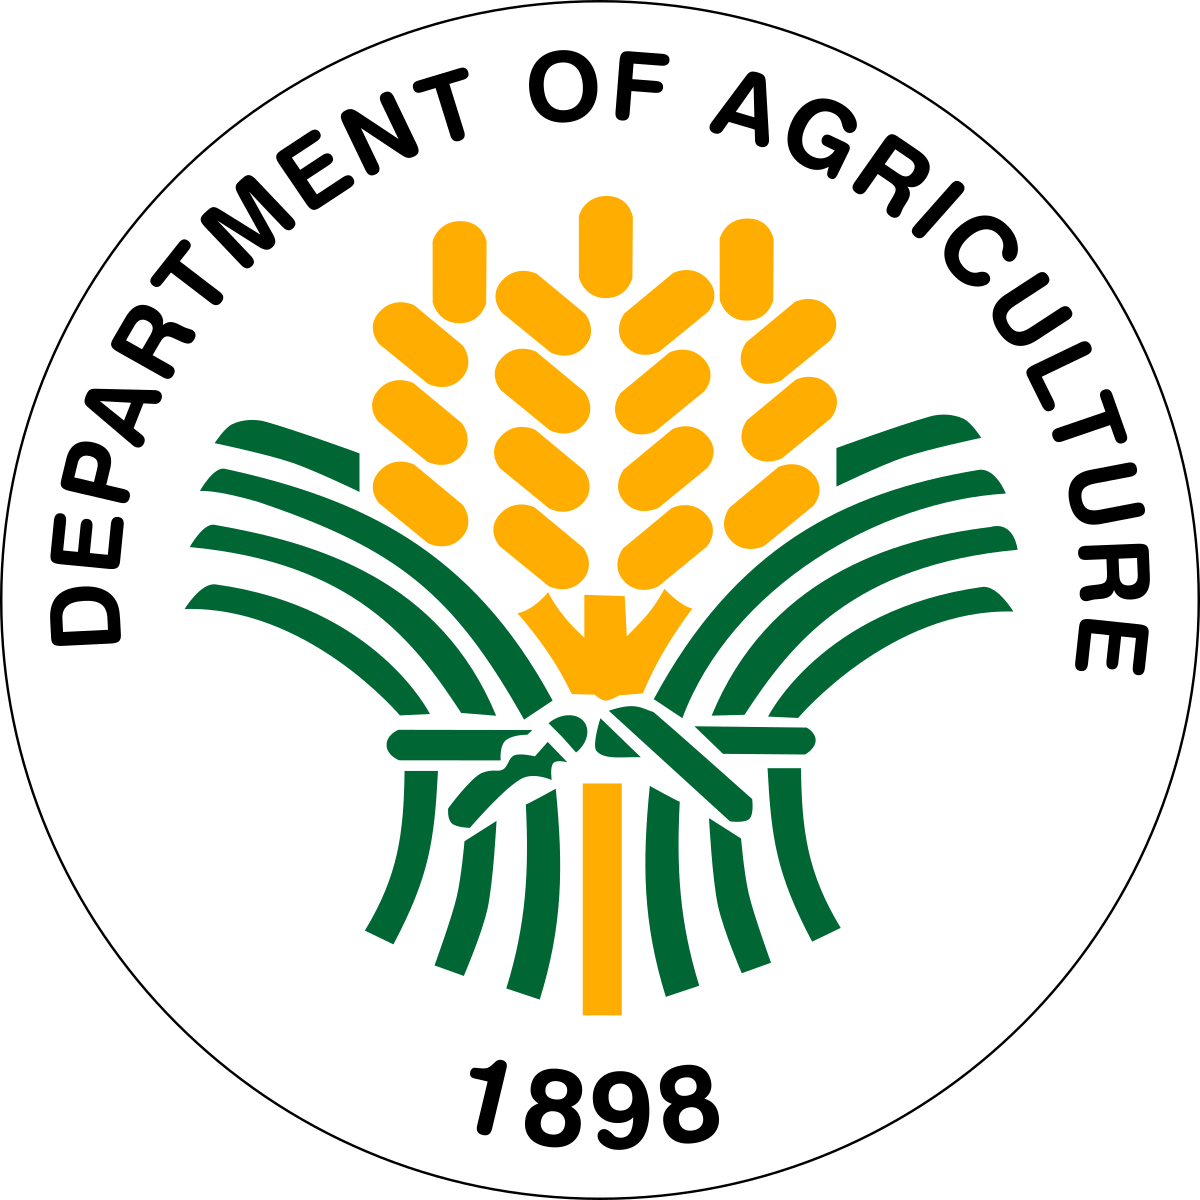 Bfar Logo - Department of Agriculture (Philippines)